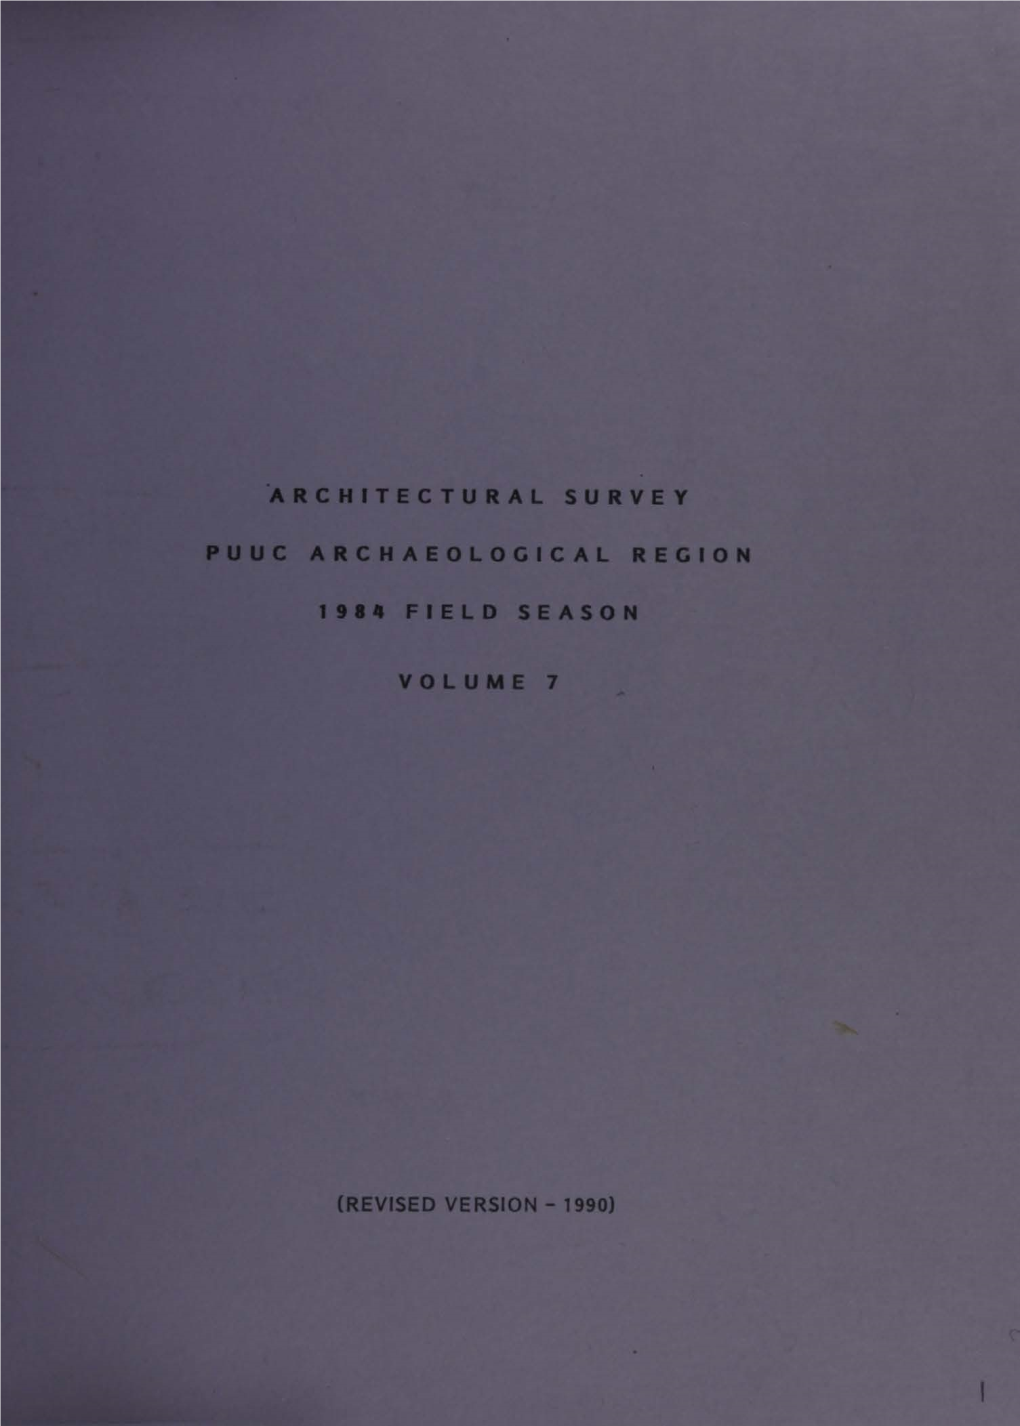 (Revised Version - 1990) ^ Architectural Survey